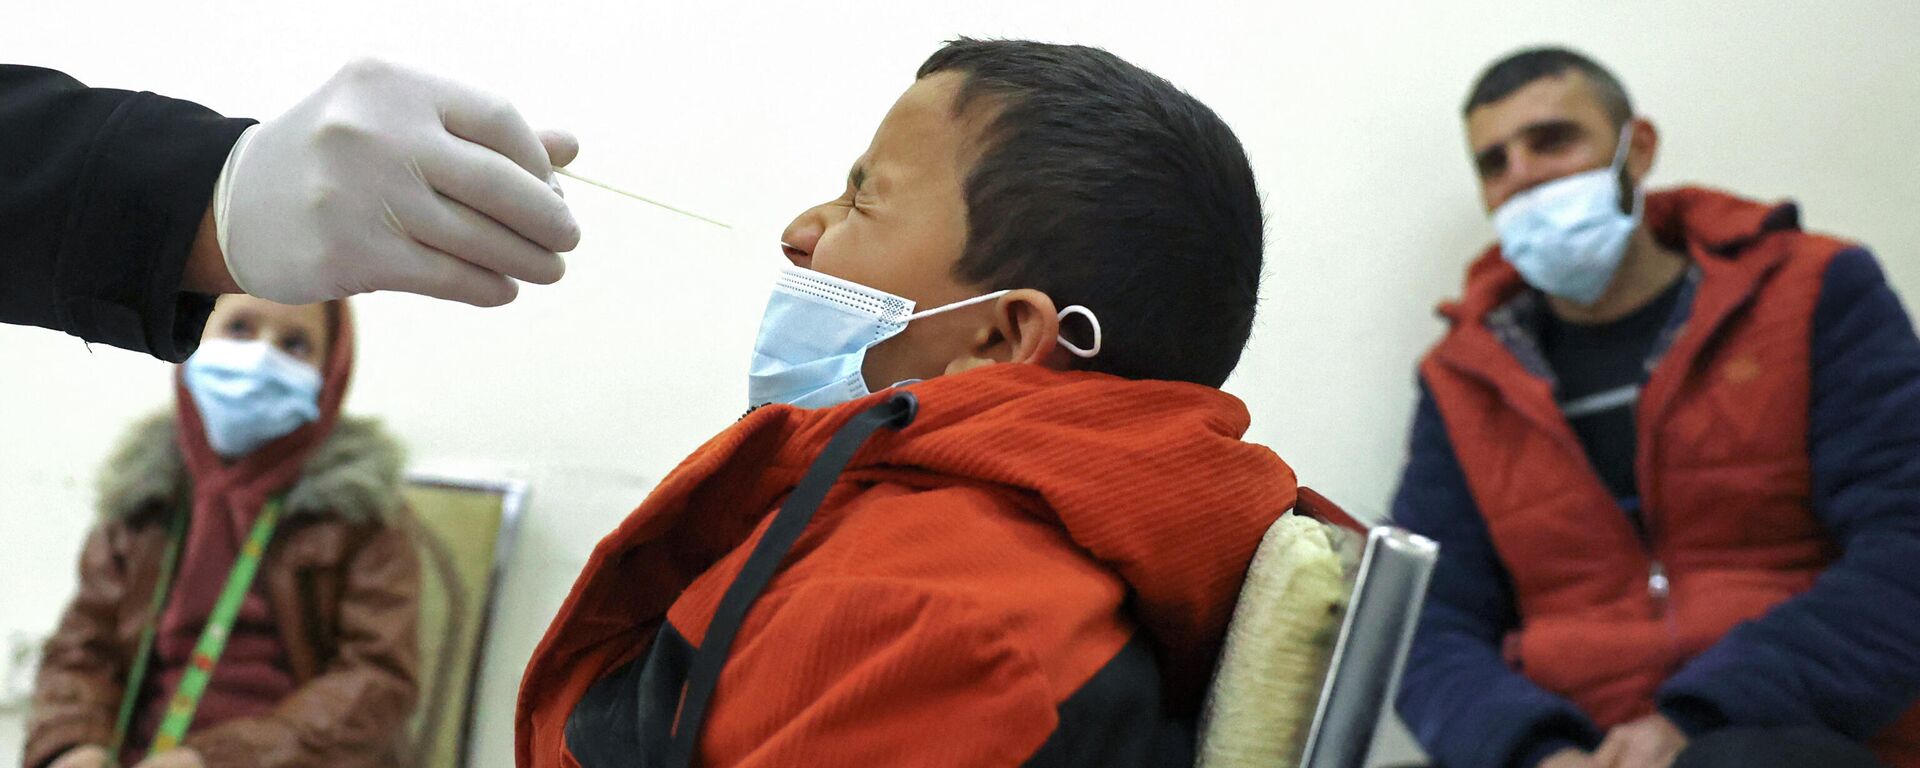 Медицинский работник берет образец мазка у ребенка для тестирования на COVID-19 - Sputnik Кыргызстан, 1920, 10.01.2022